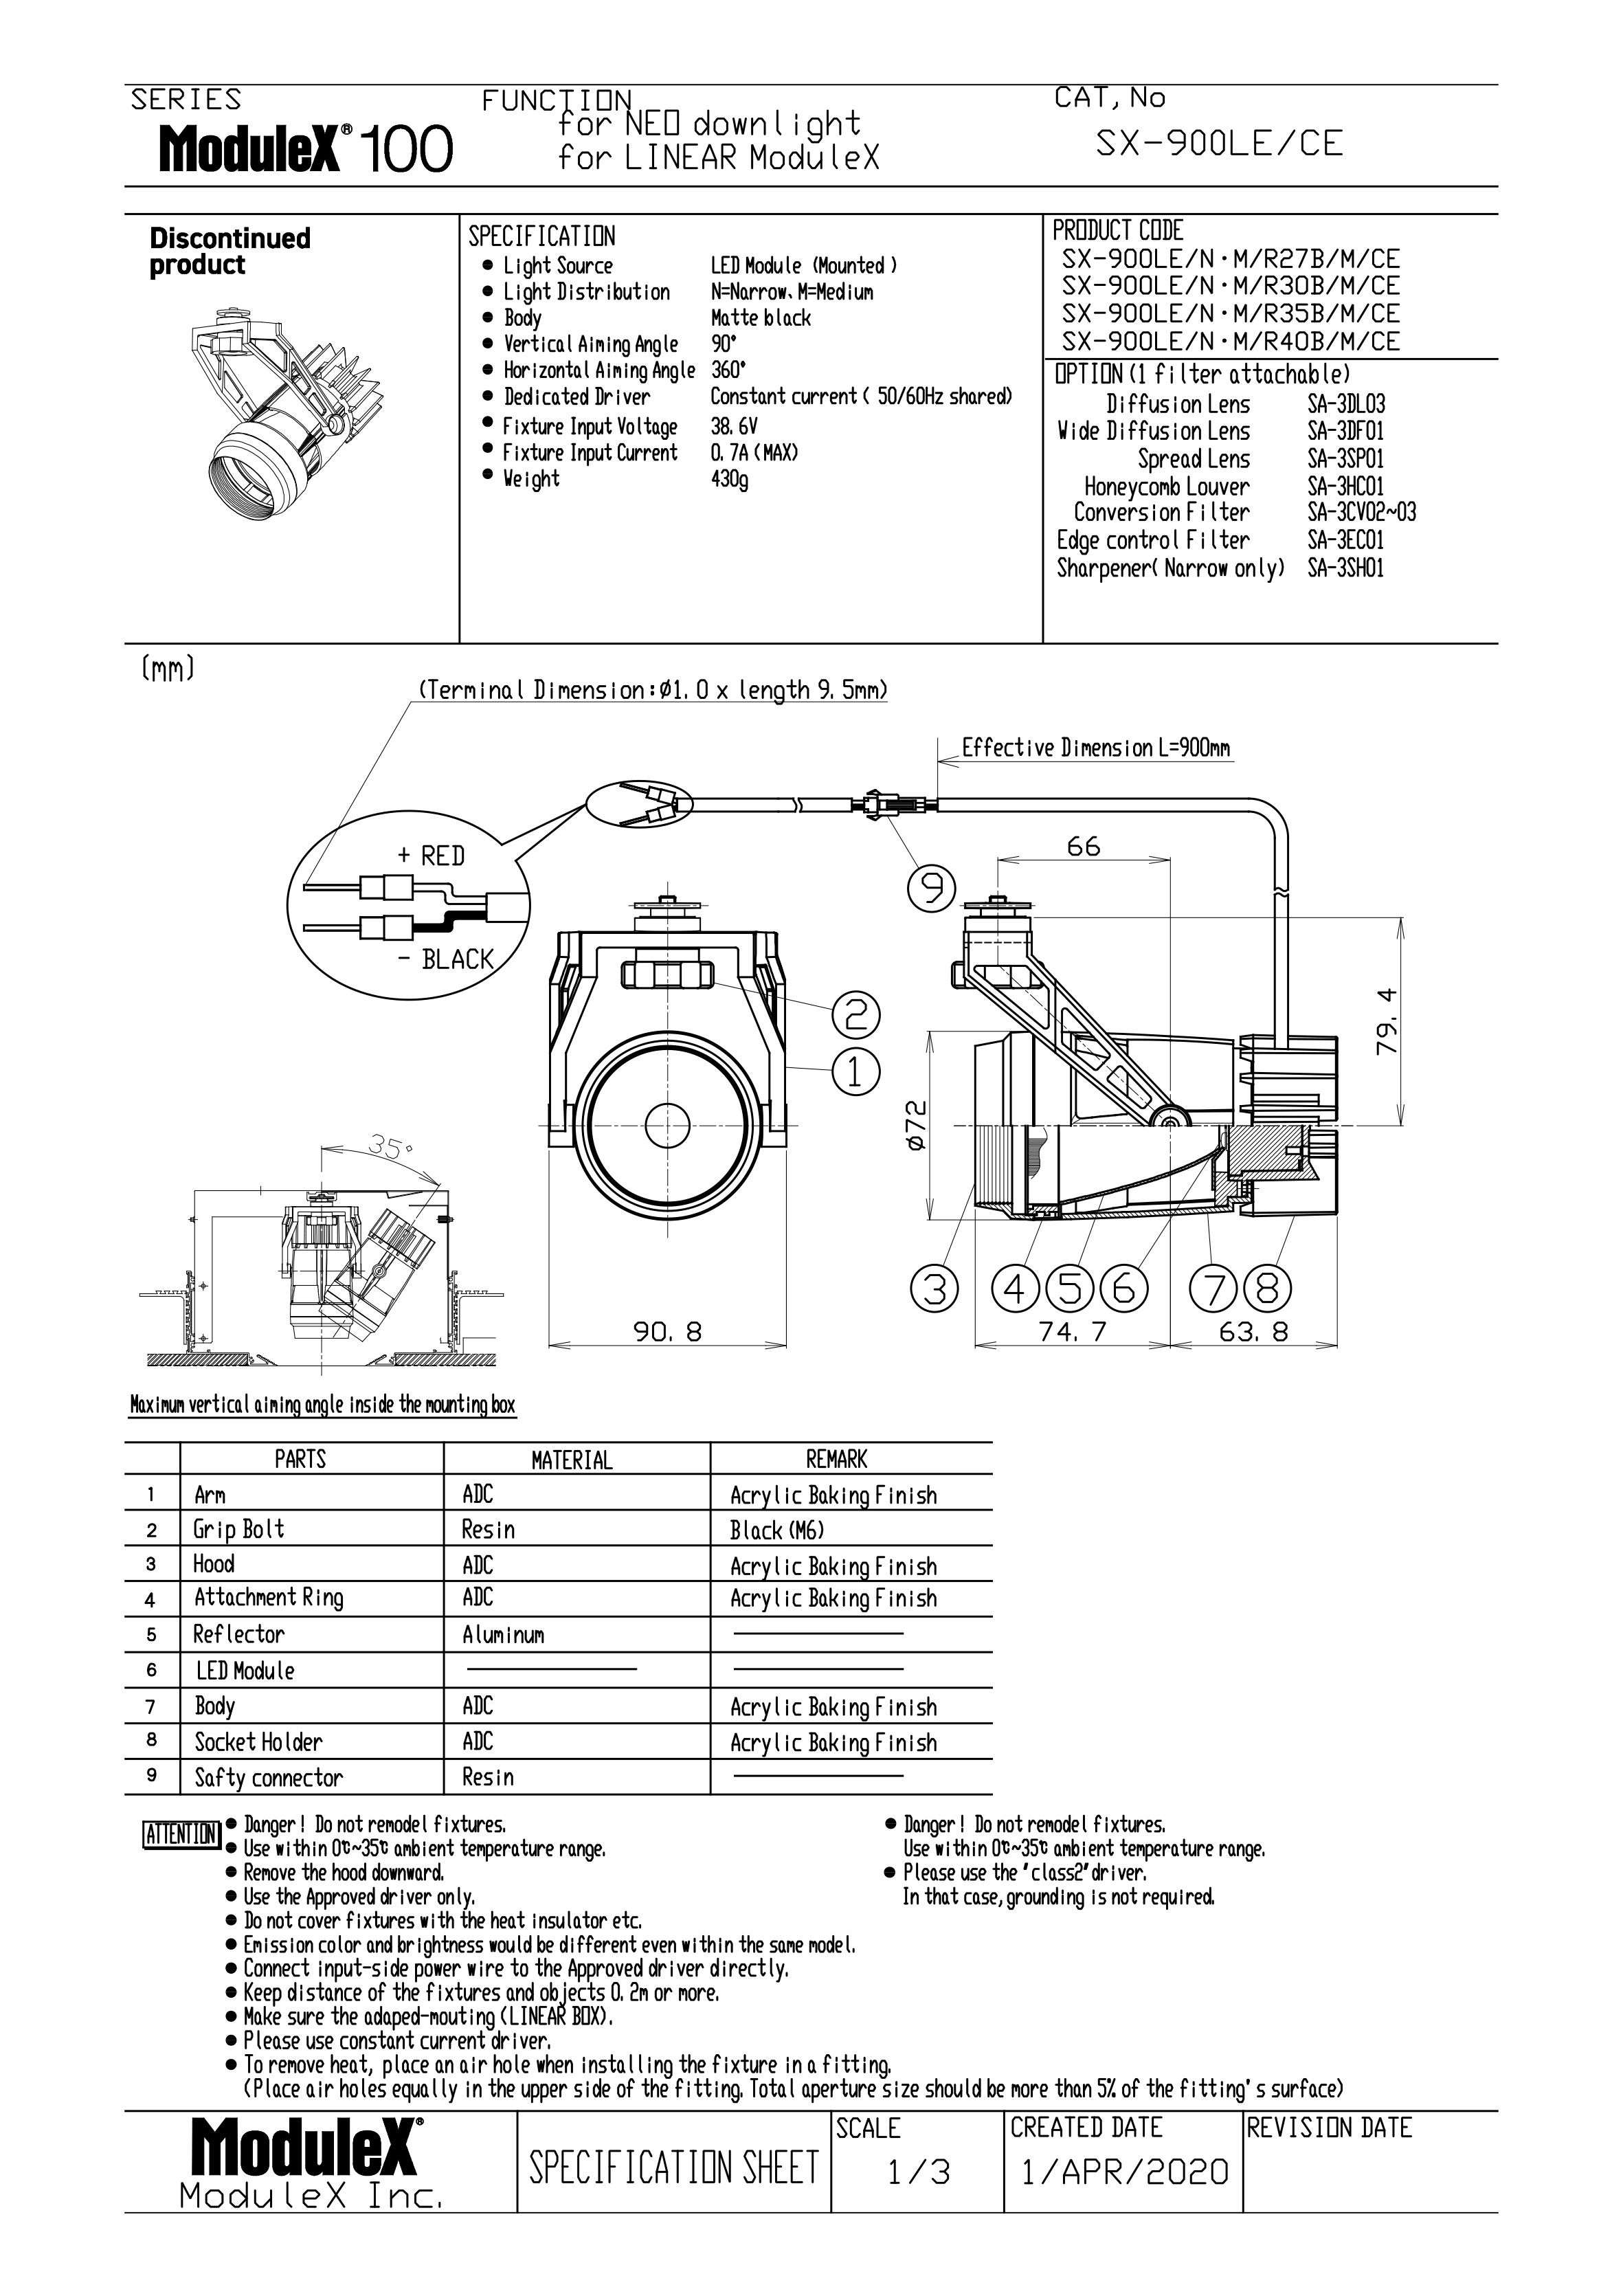 SX-900LE Specification Sheet